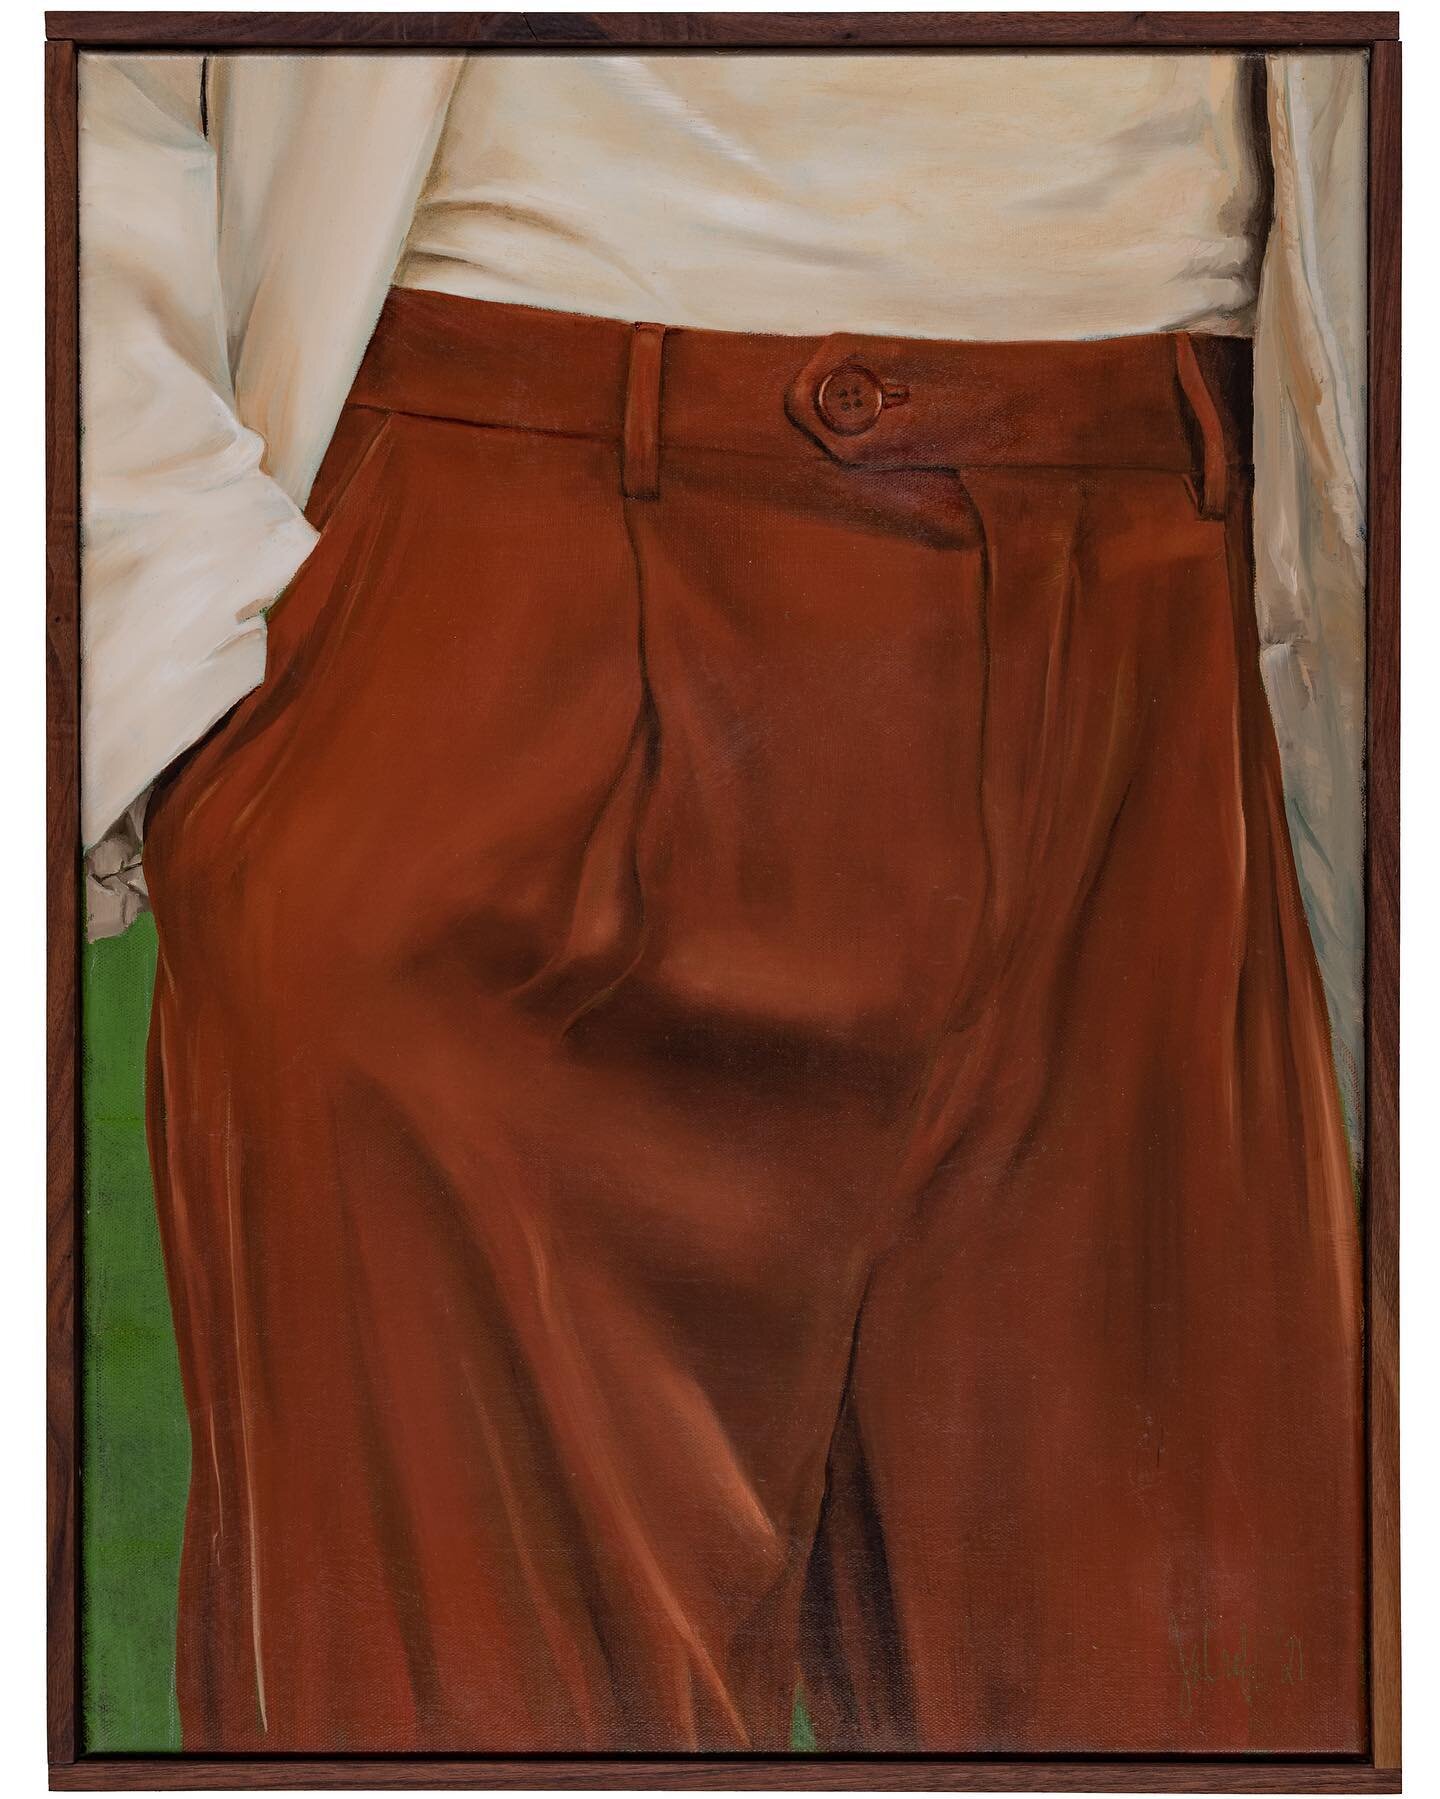 🔴SOLD
&lsquo;Orange Pants&rsquo;
18&rdquo;x24&rdquo;
Oil on Canvas
&lsquo;CASUAL SATISFACTION&rsquo;

📸: @faymoneystudio 

#fineart #contemporarypainting #contemporaryart 
#modernart #art #painting #artcollector #figurativeart #visualart #oilpainti